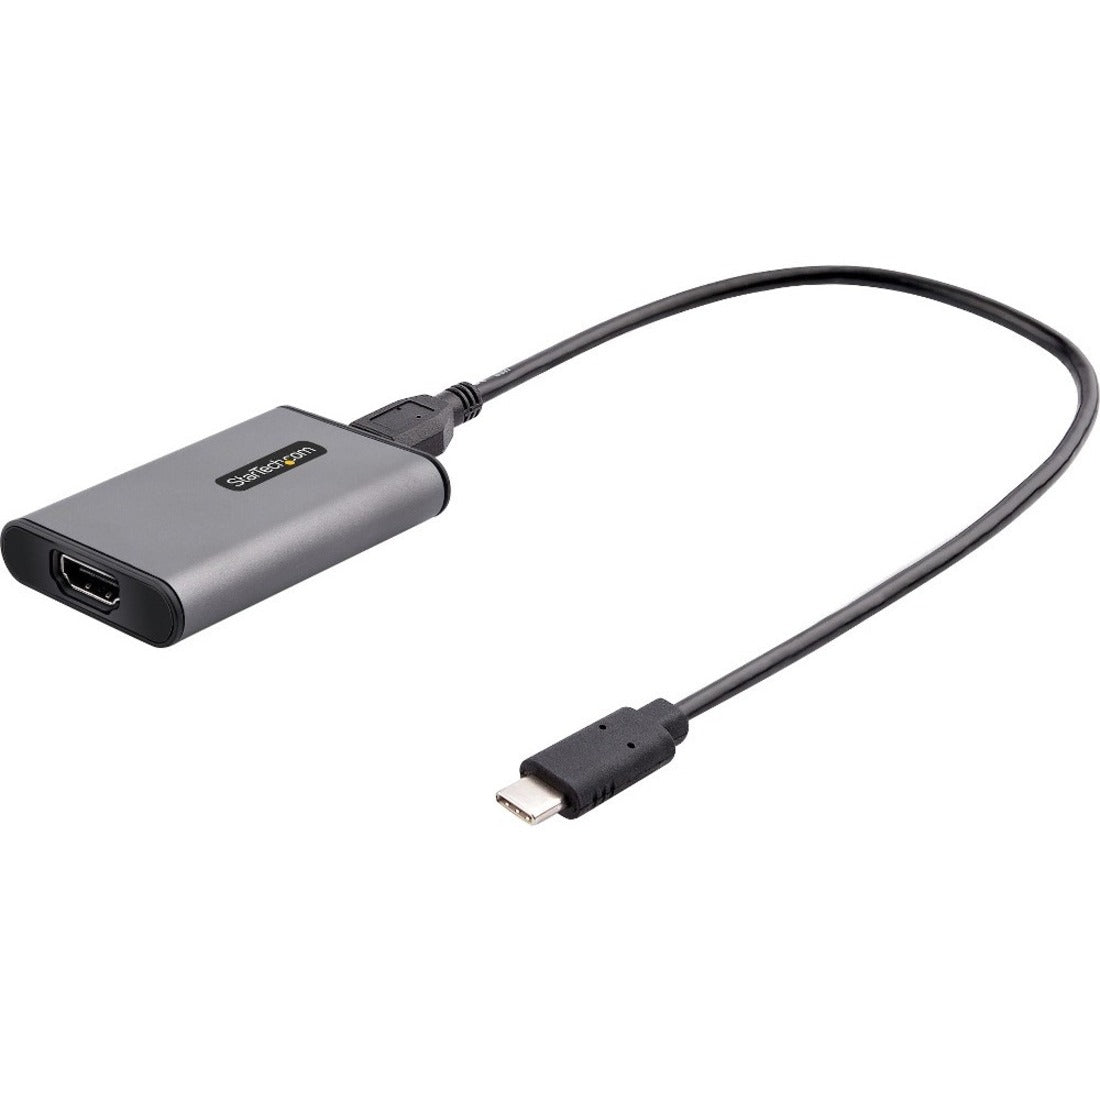 StarTech.com 4K30-HDMI-CAPTURE USB 3.0 HDMI Video Capture Device, Record and Stream 4K Video